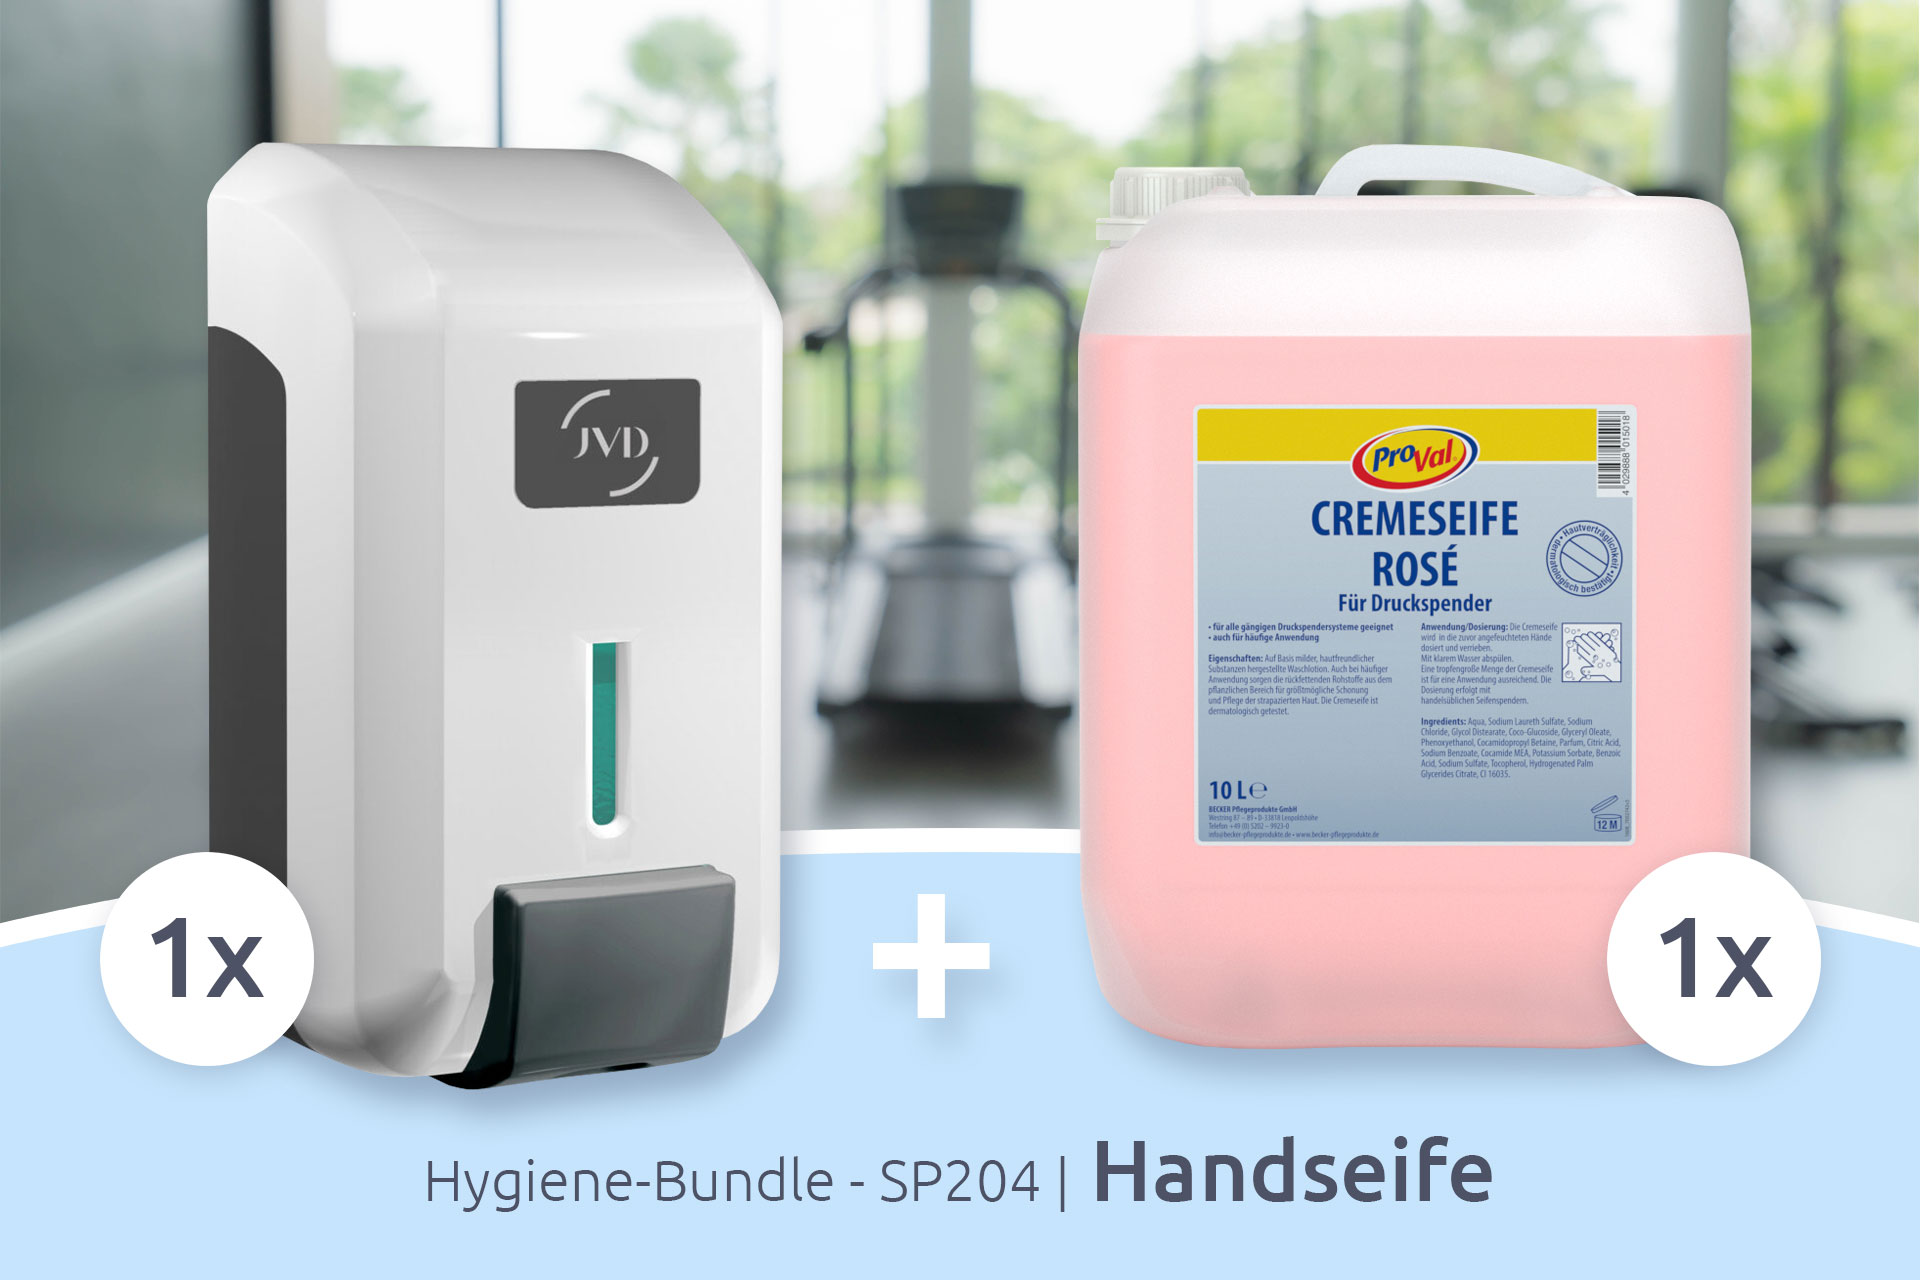 hygiene-bundle-jvd-handseife-hell